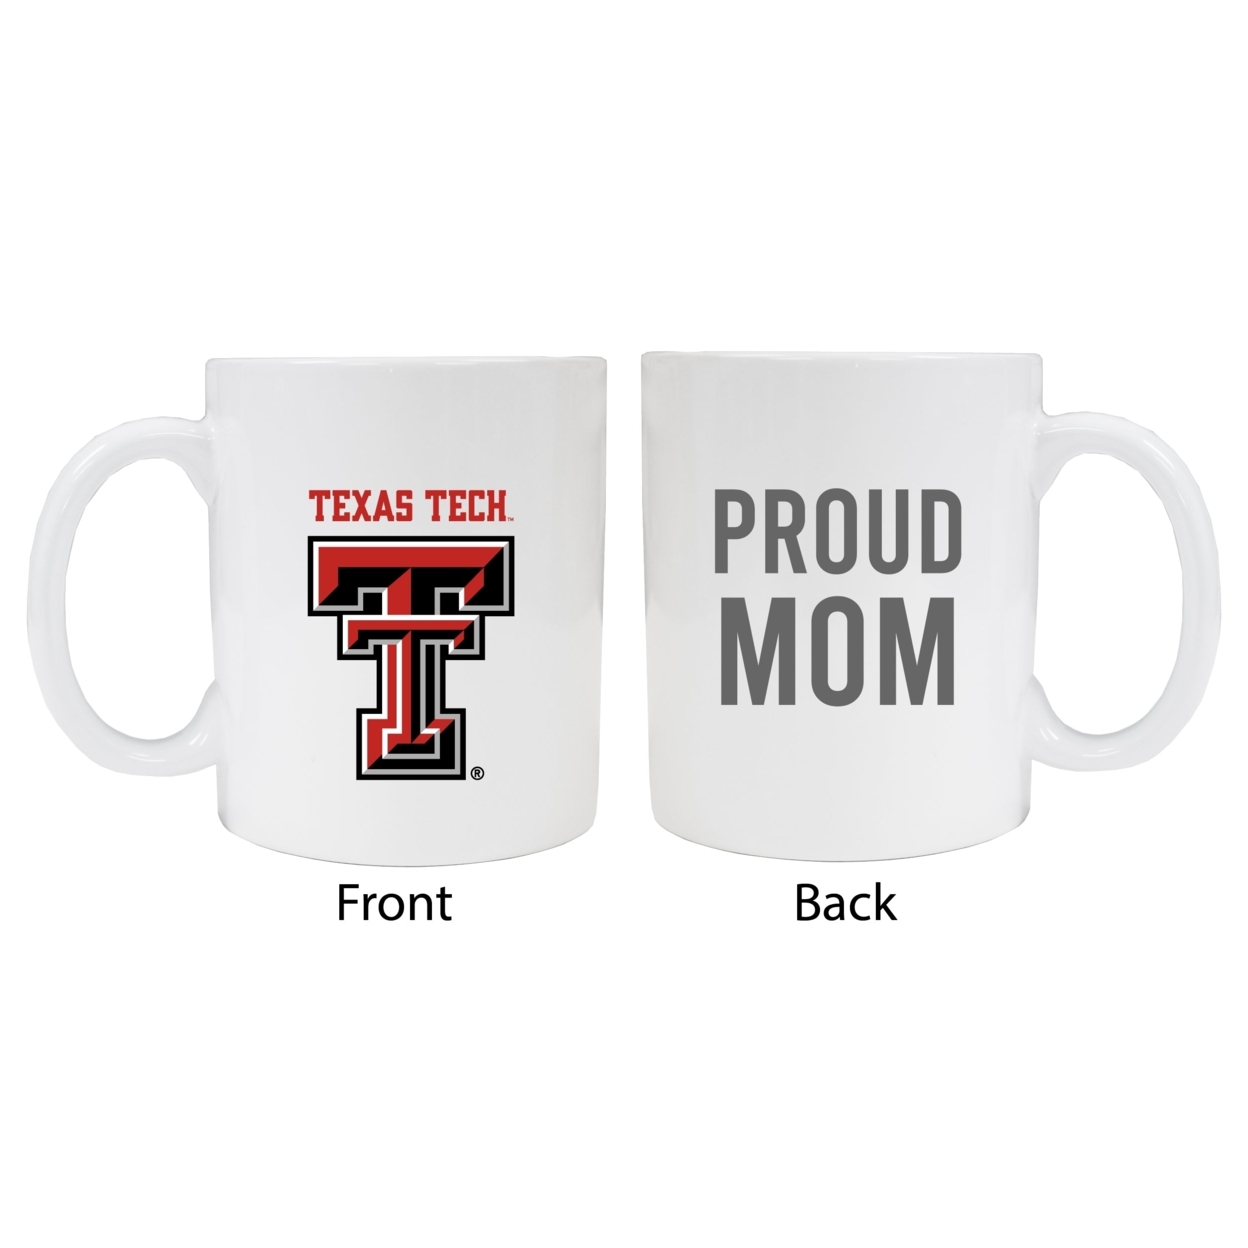 Texas Tech Red Raiders Proud Mom Ceramic Coffee Mug - White (2 Pack)